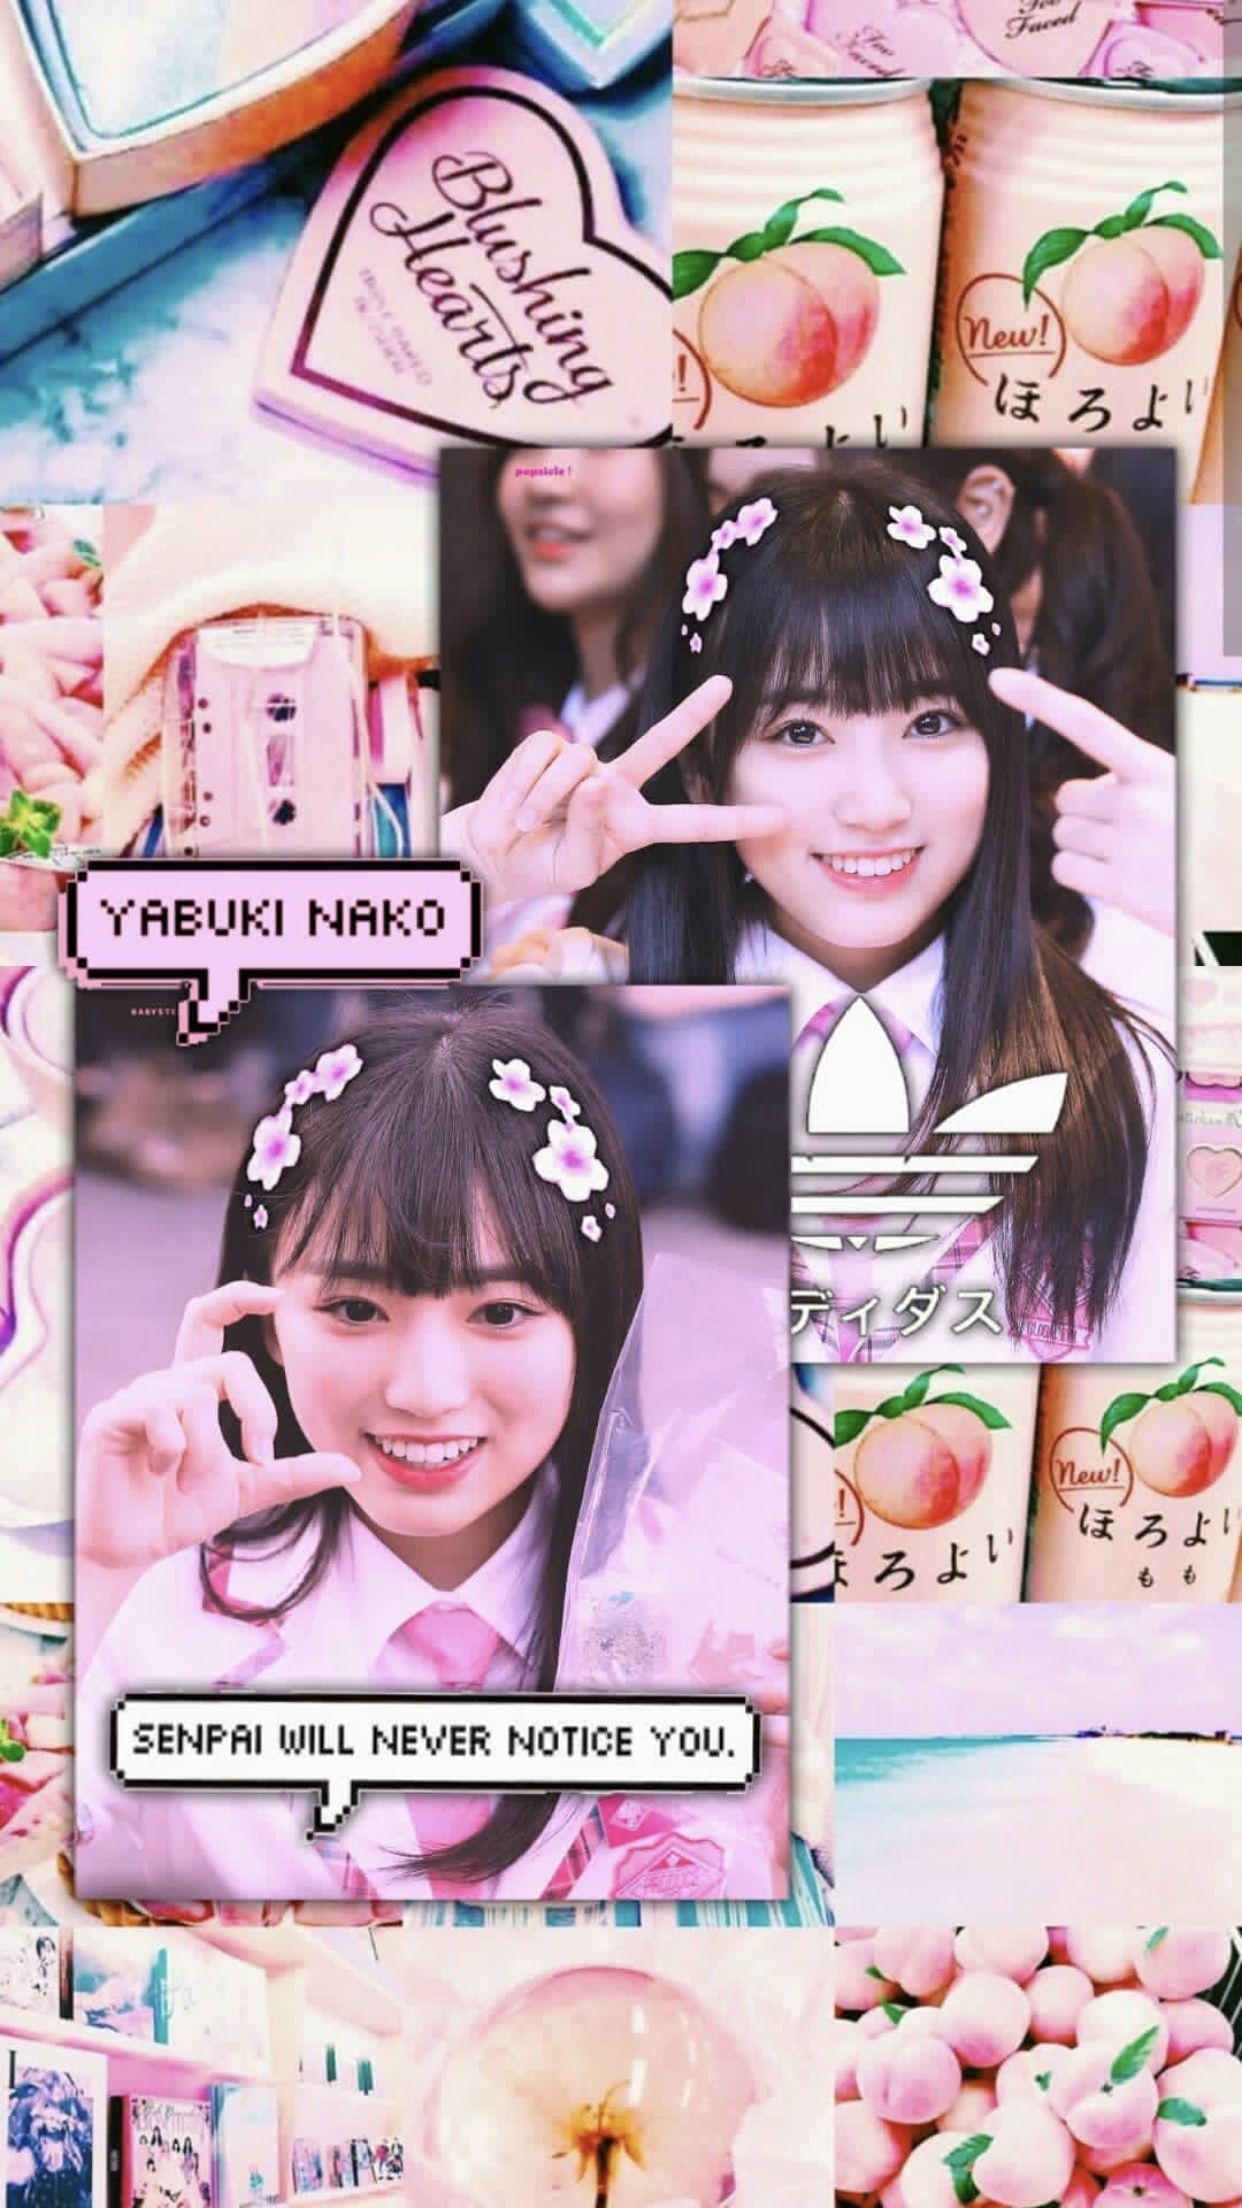 Yabuki Nako Izone In Wallpaper Kpop Lock Screen